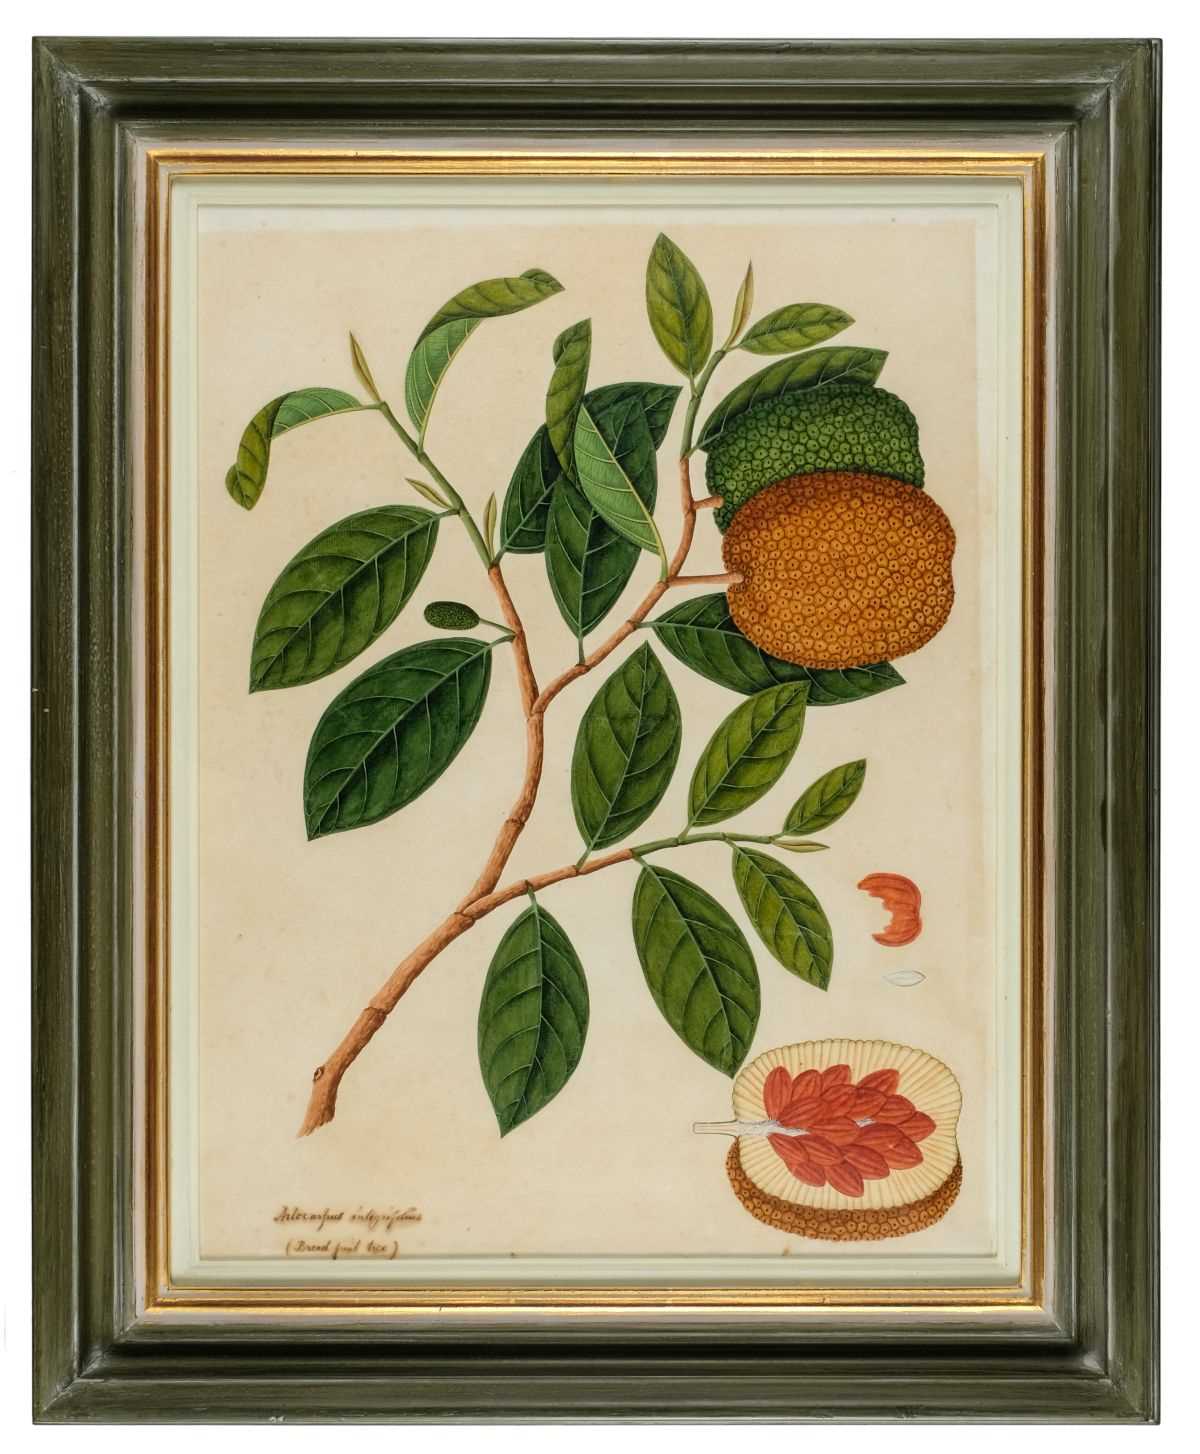 Lot 406 - Company School. Artocarpus integrifolius (Bread fruit tree), circa 1815-20